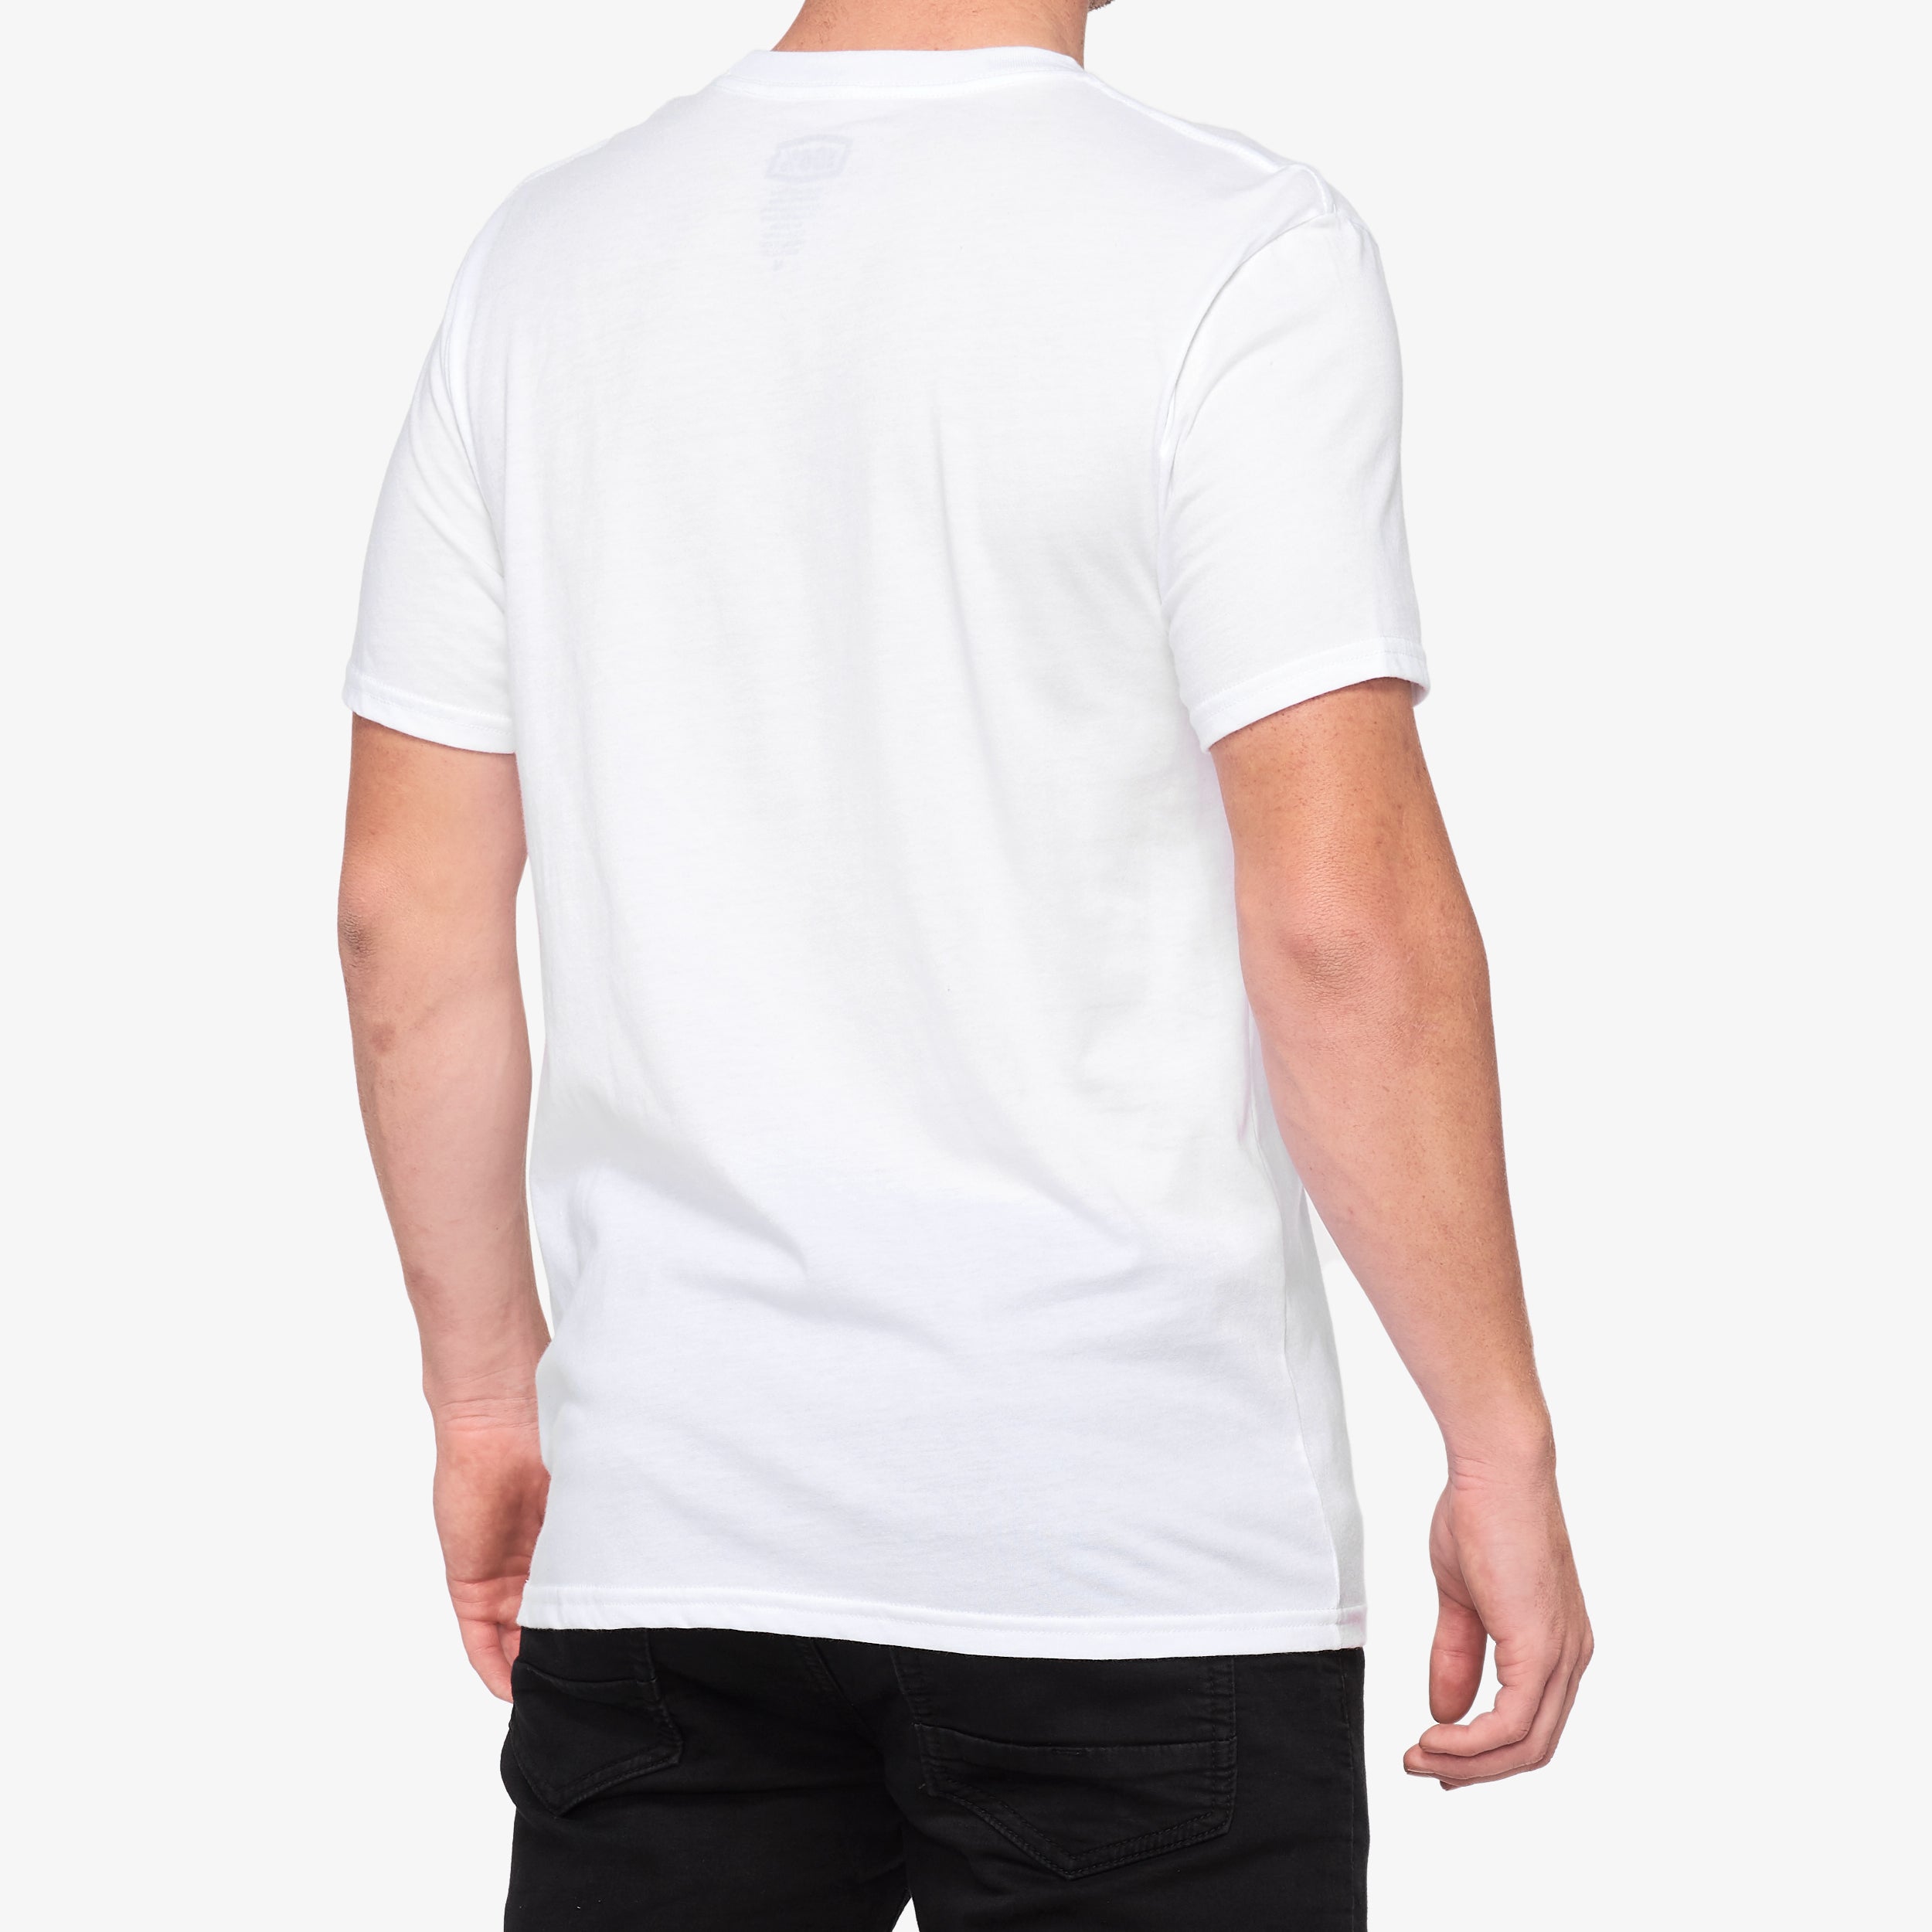 ALIBI T-Shirt White - Secondary